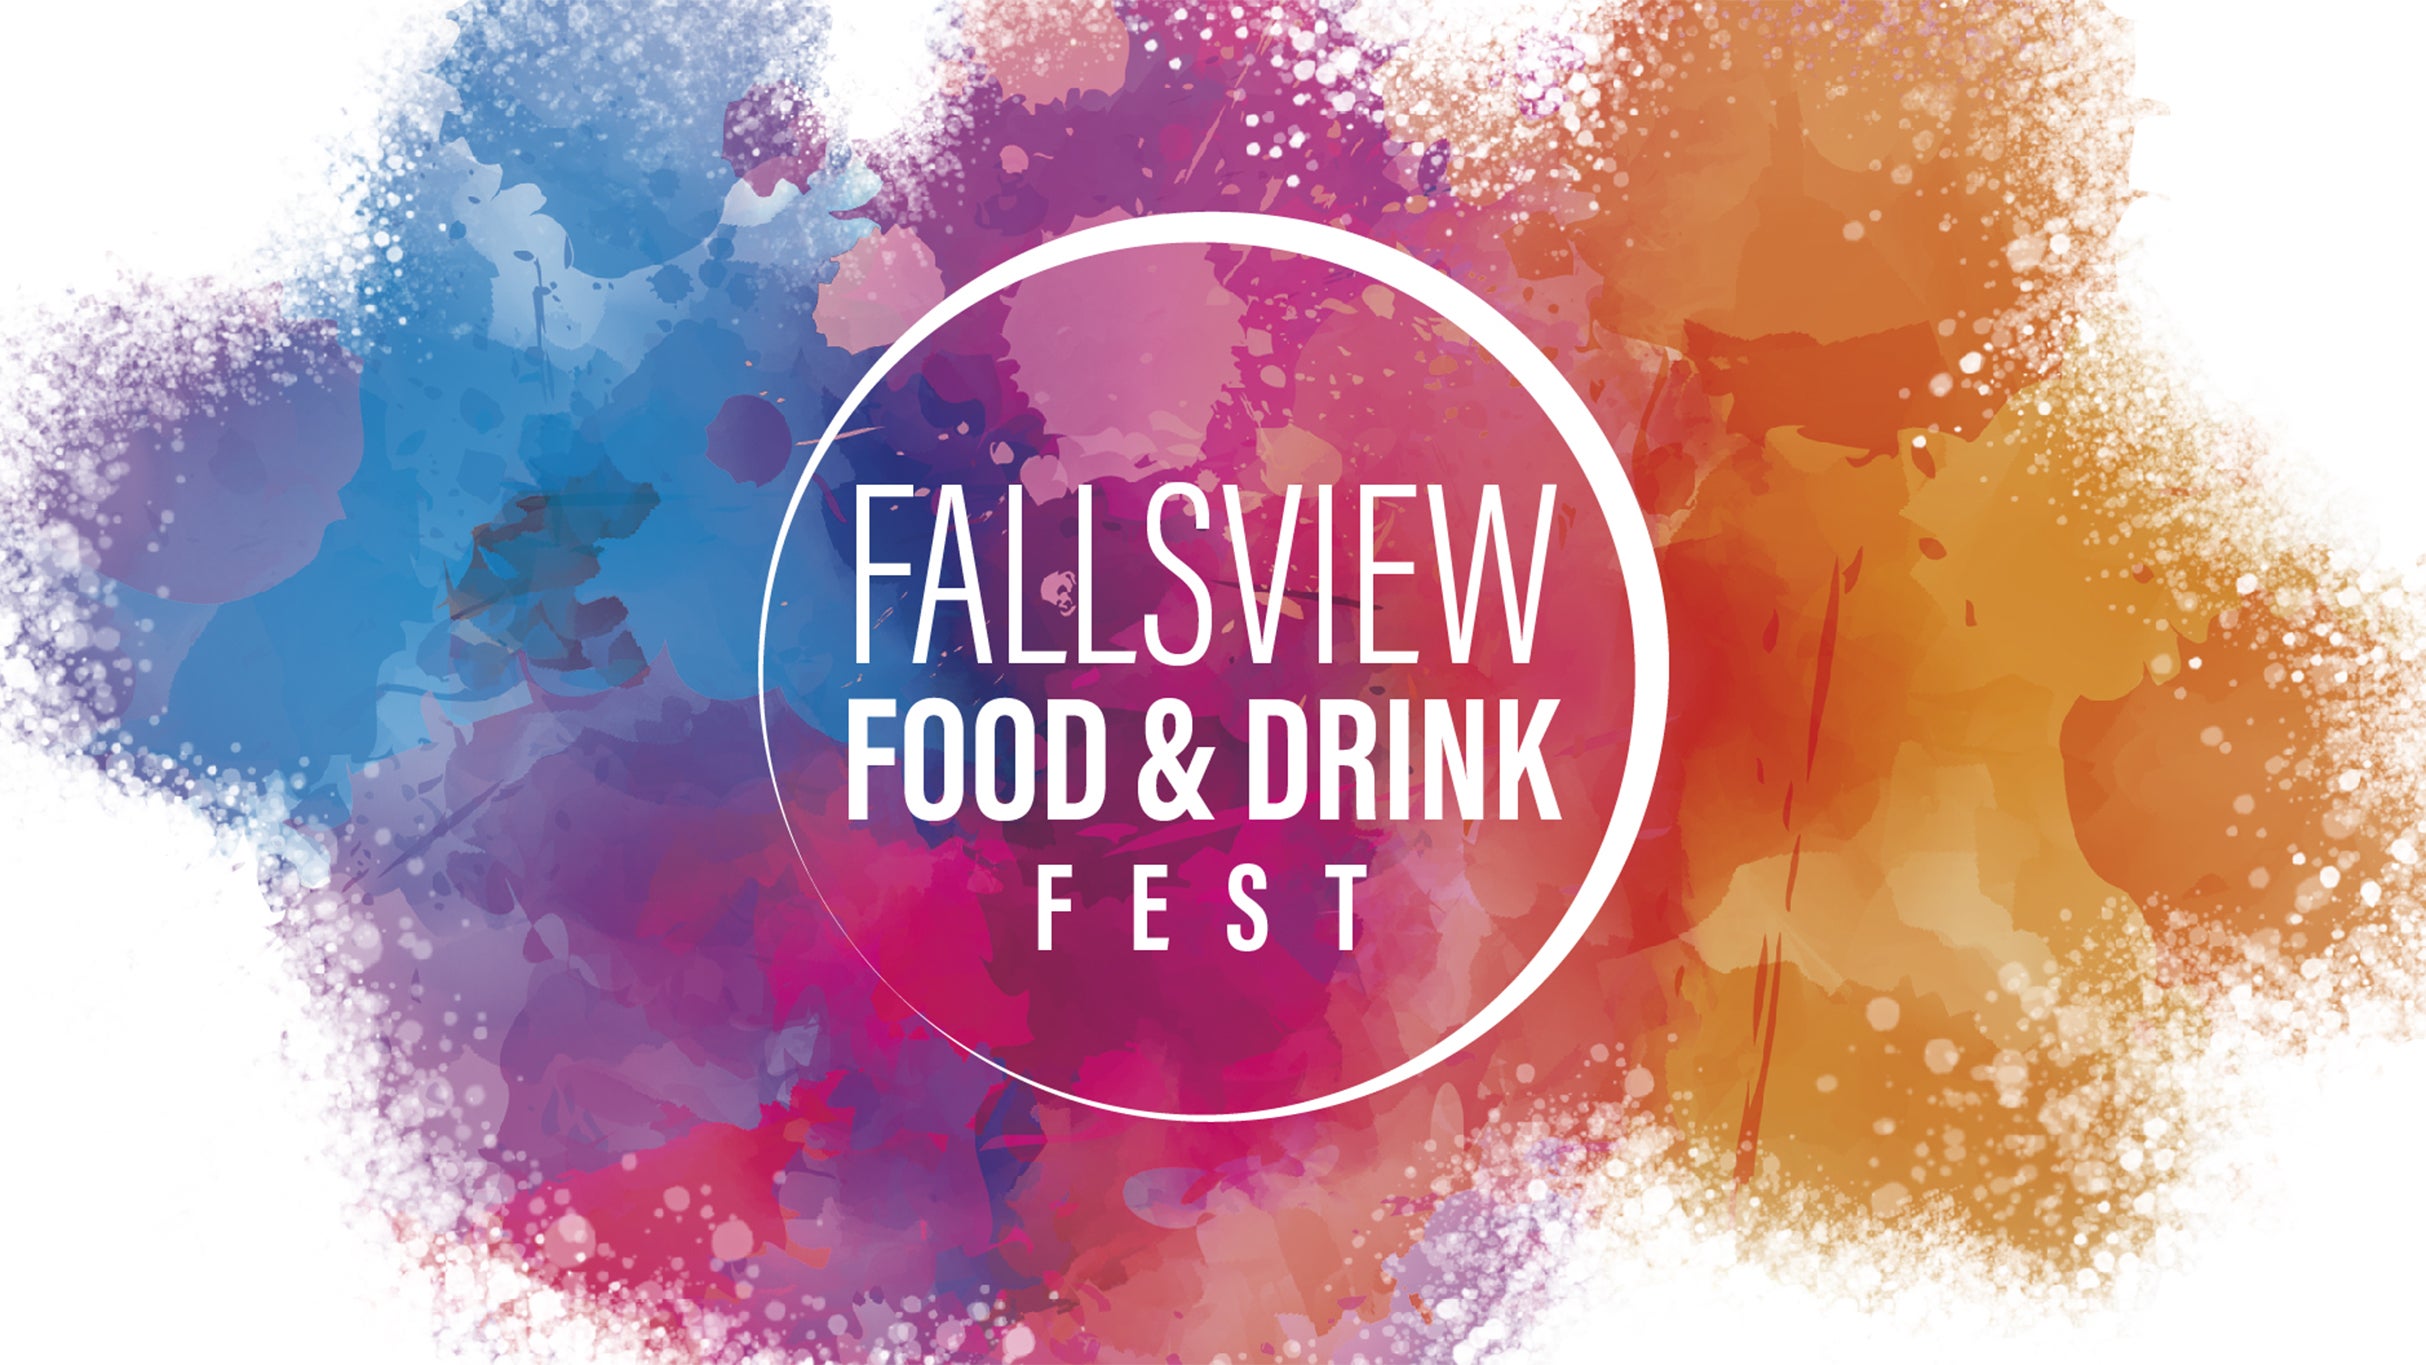 Fallsview Food & Drink Fest - Fallsview Food Con in Niagara Falls promo photo for Momentum presale offer code